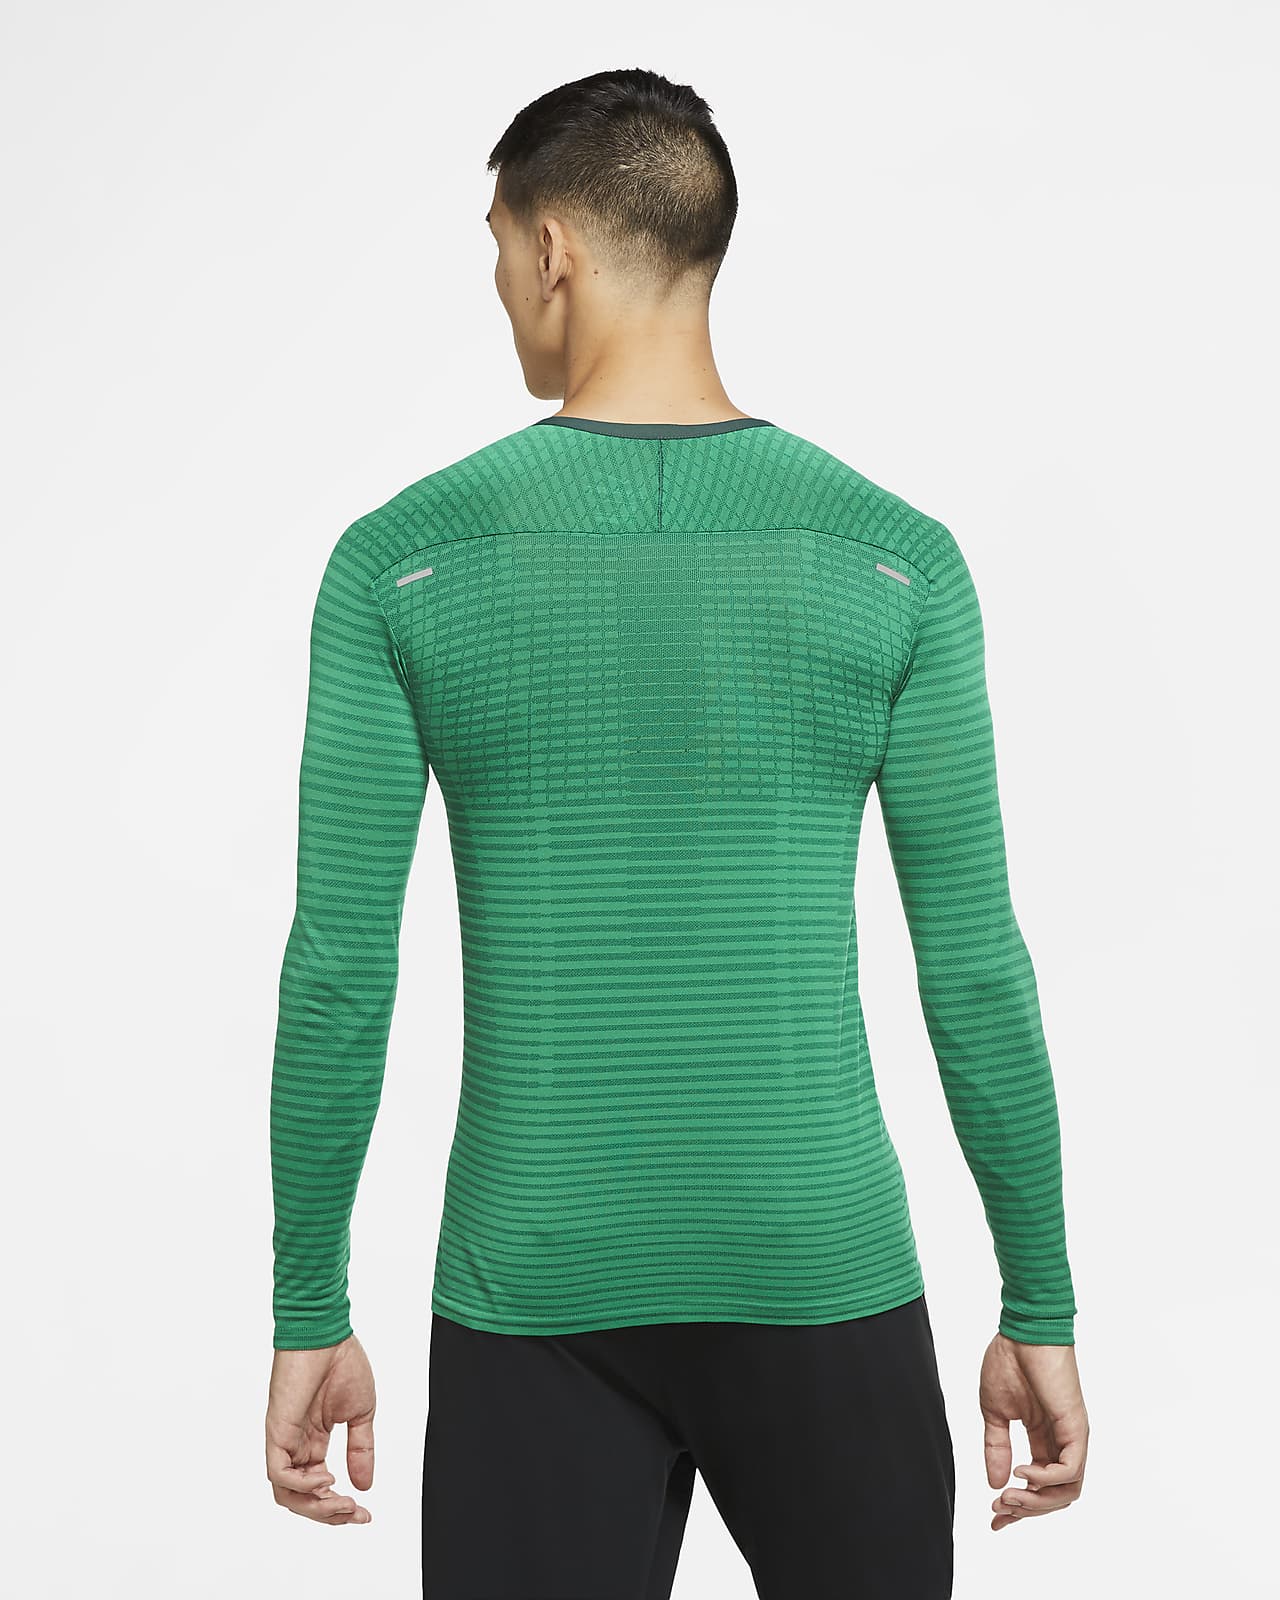 Nike TechKnit Ultra Men's Long-Sleeve 